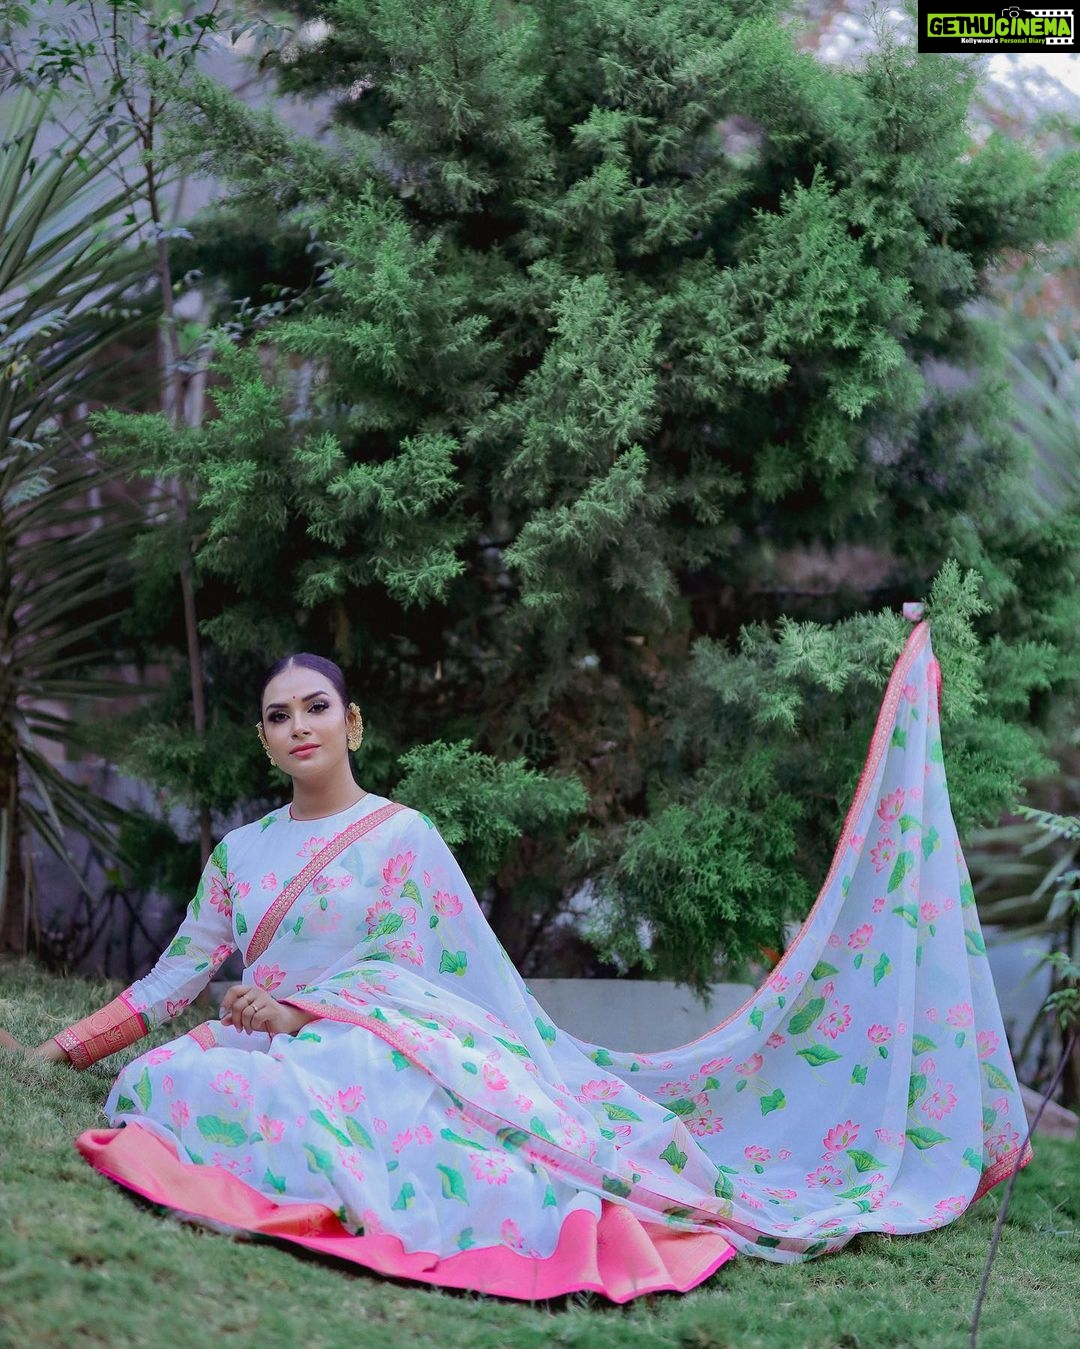 Hari Teja Instagram - Bhoomi turns one ❤️ Video & Pc credits : @relivevisuals @whoisindrasena ❤️ Decoration: @occasionsbysudhadatla